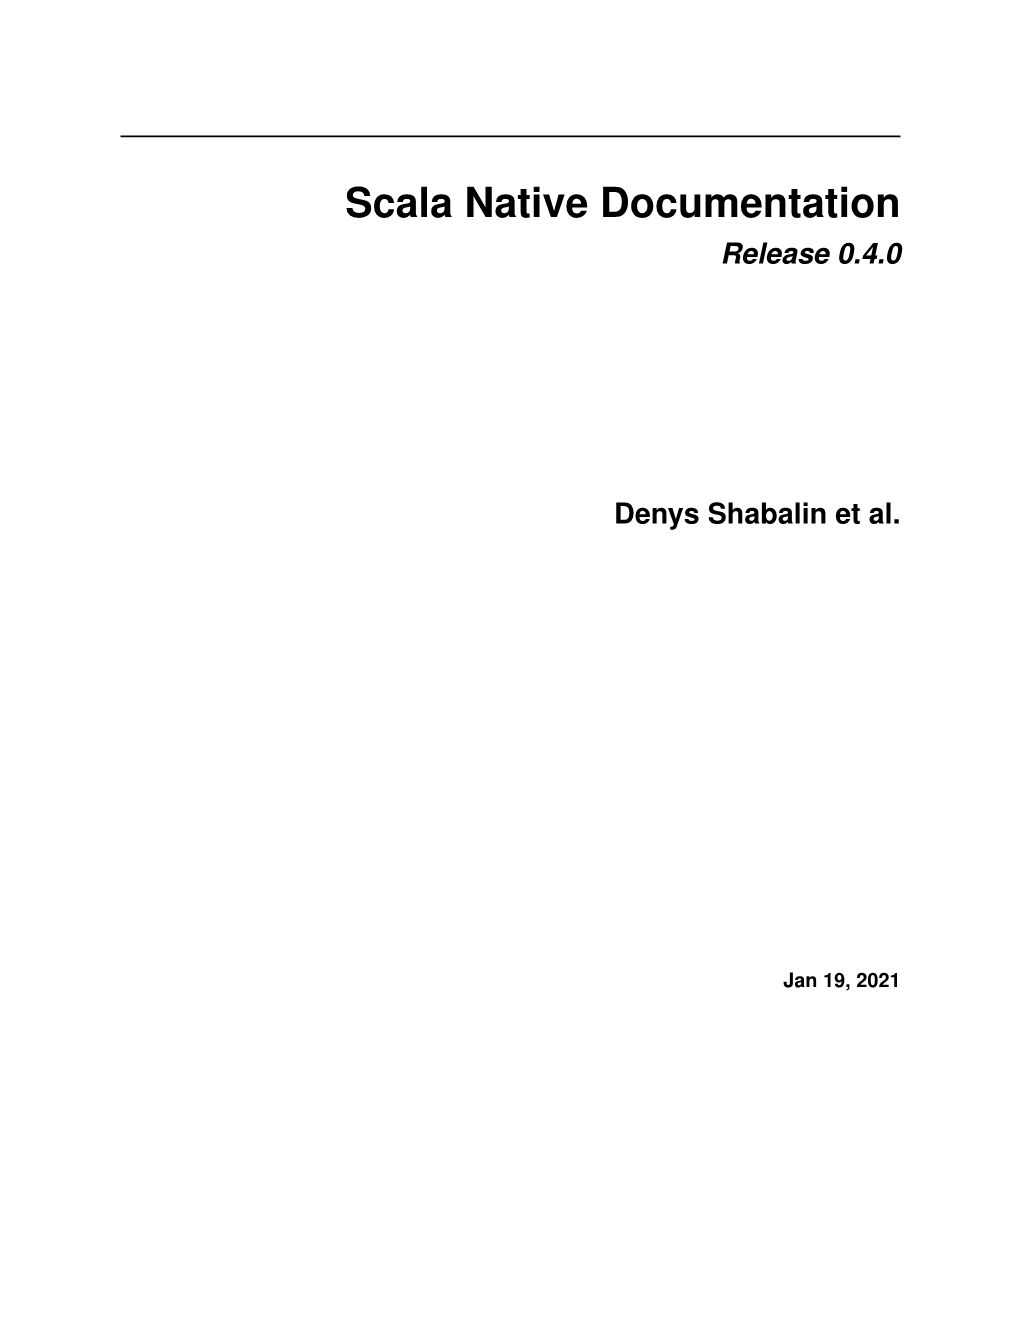 Scala Native Documentation Release 0.4.0